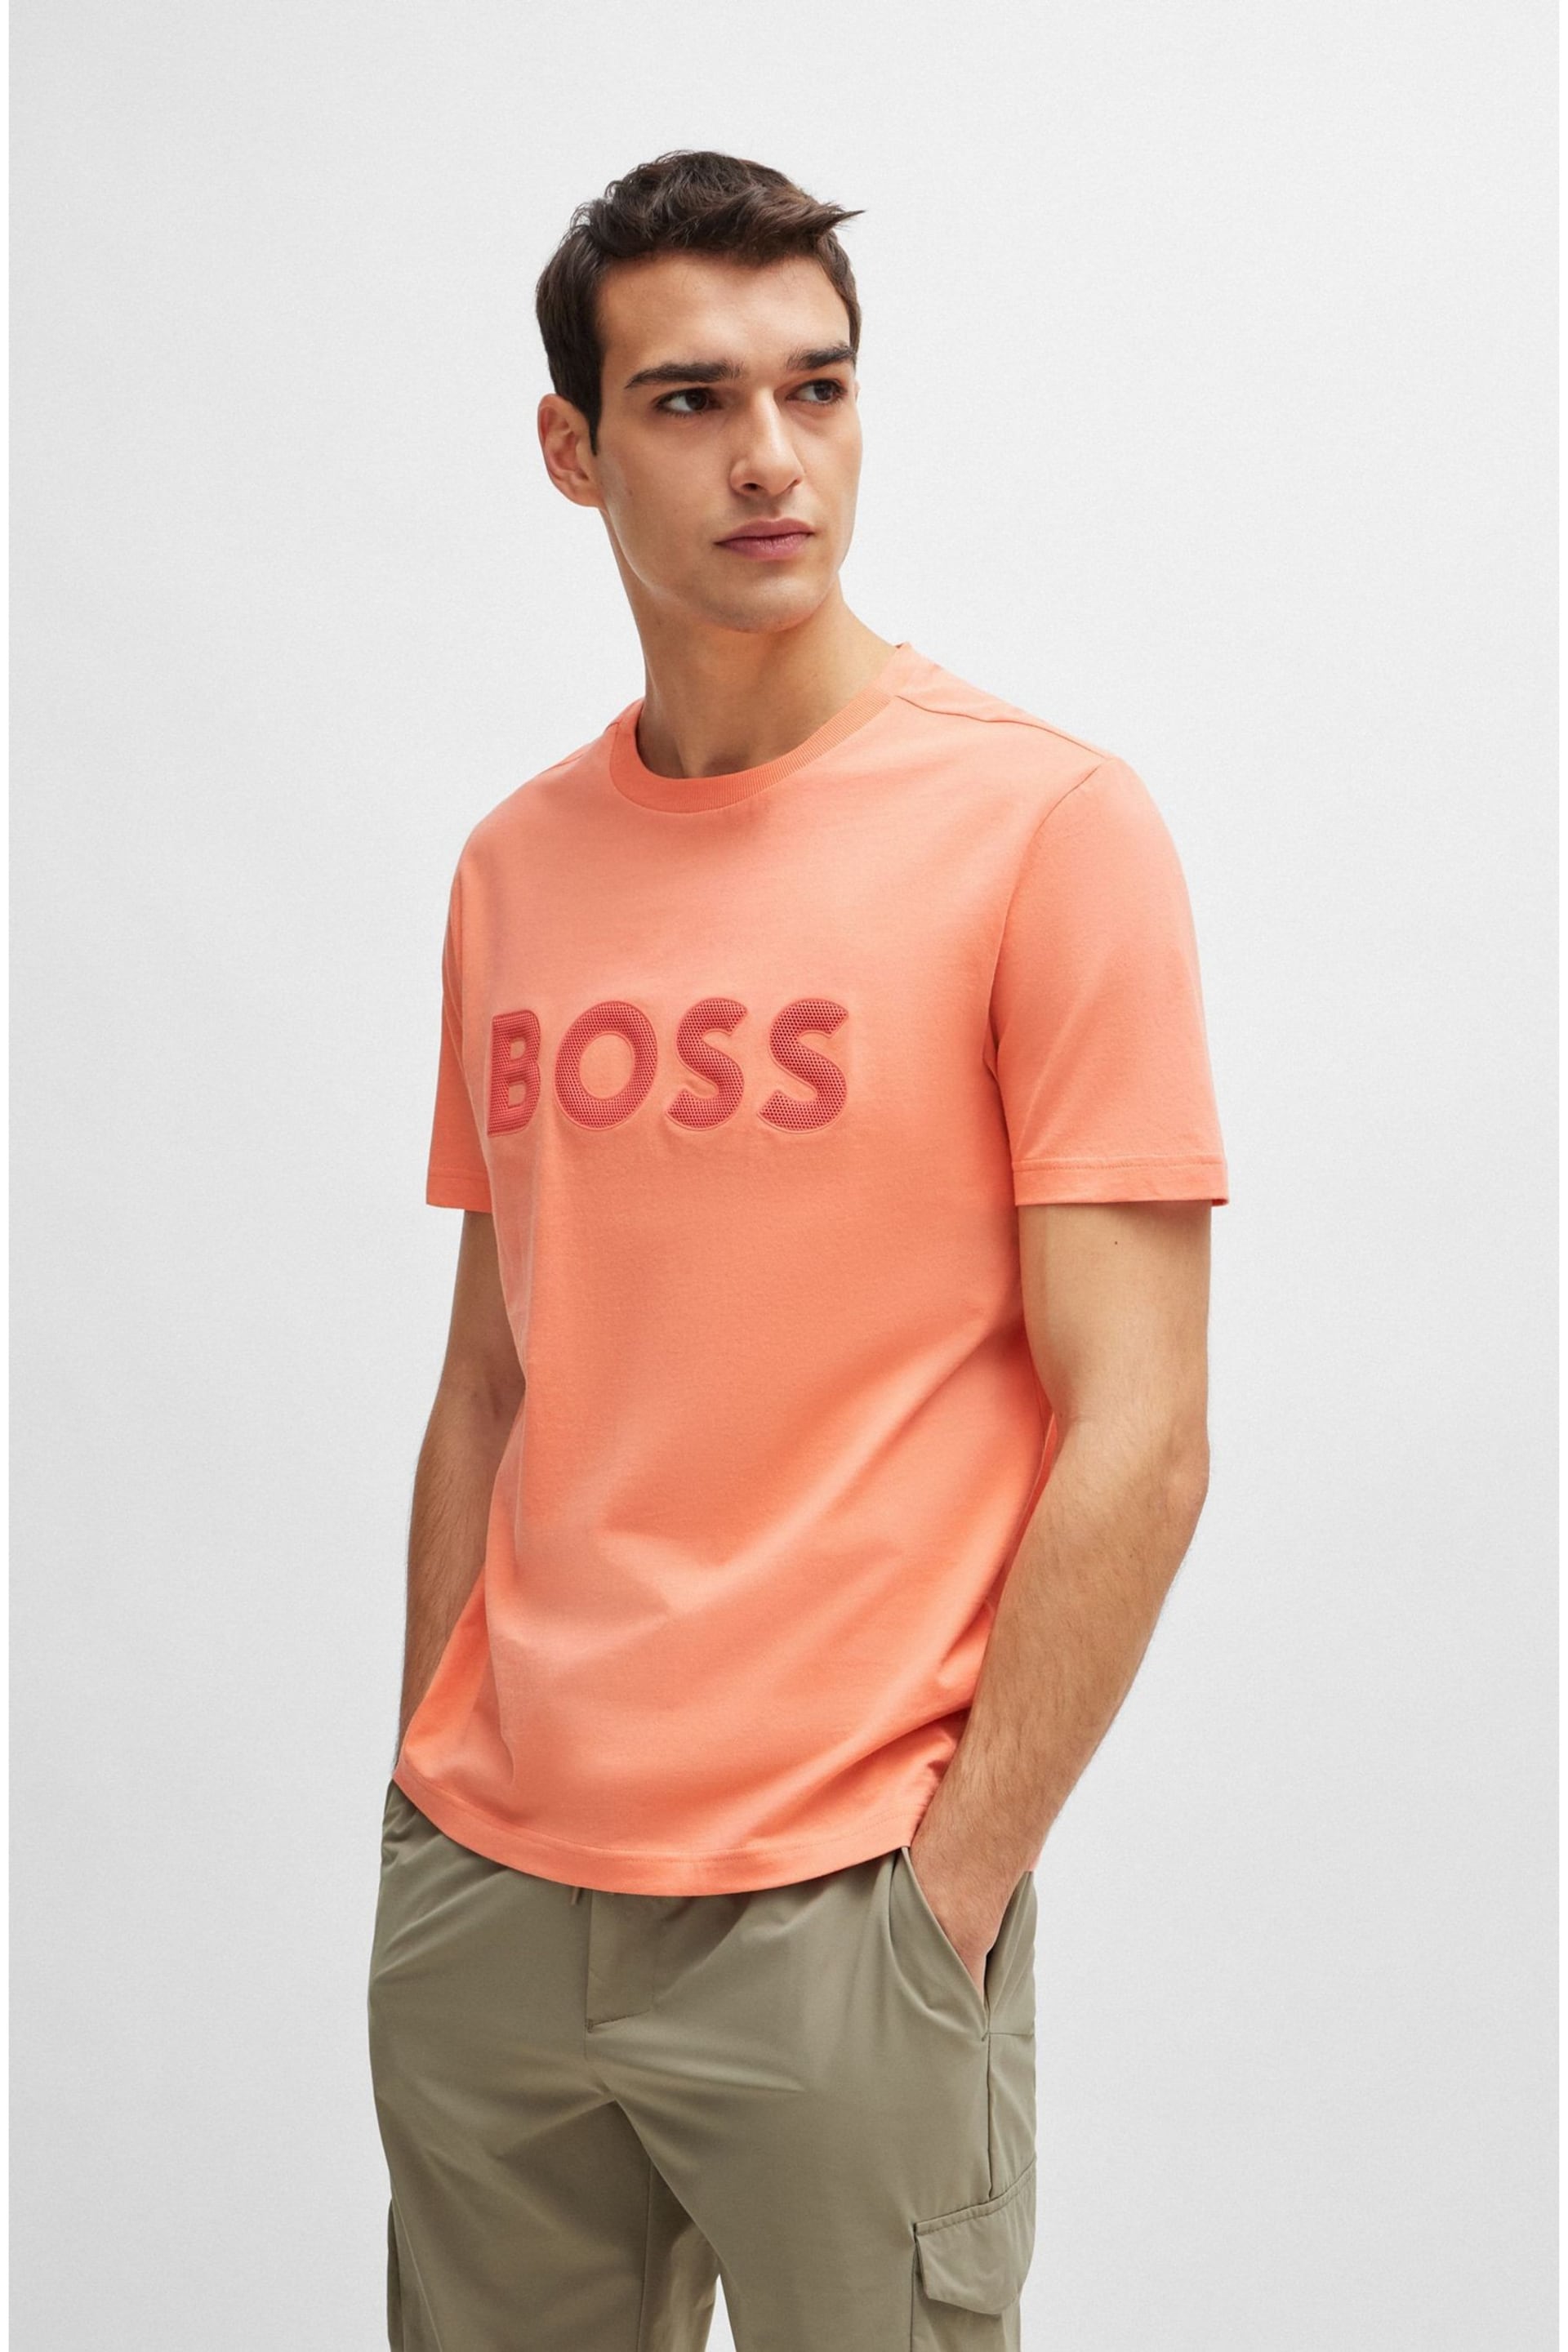 BOSS Orange Large Mesh Chest Logo T-Shirt - Image 1 of 5